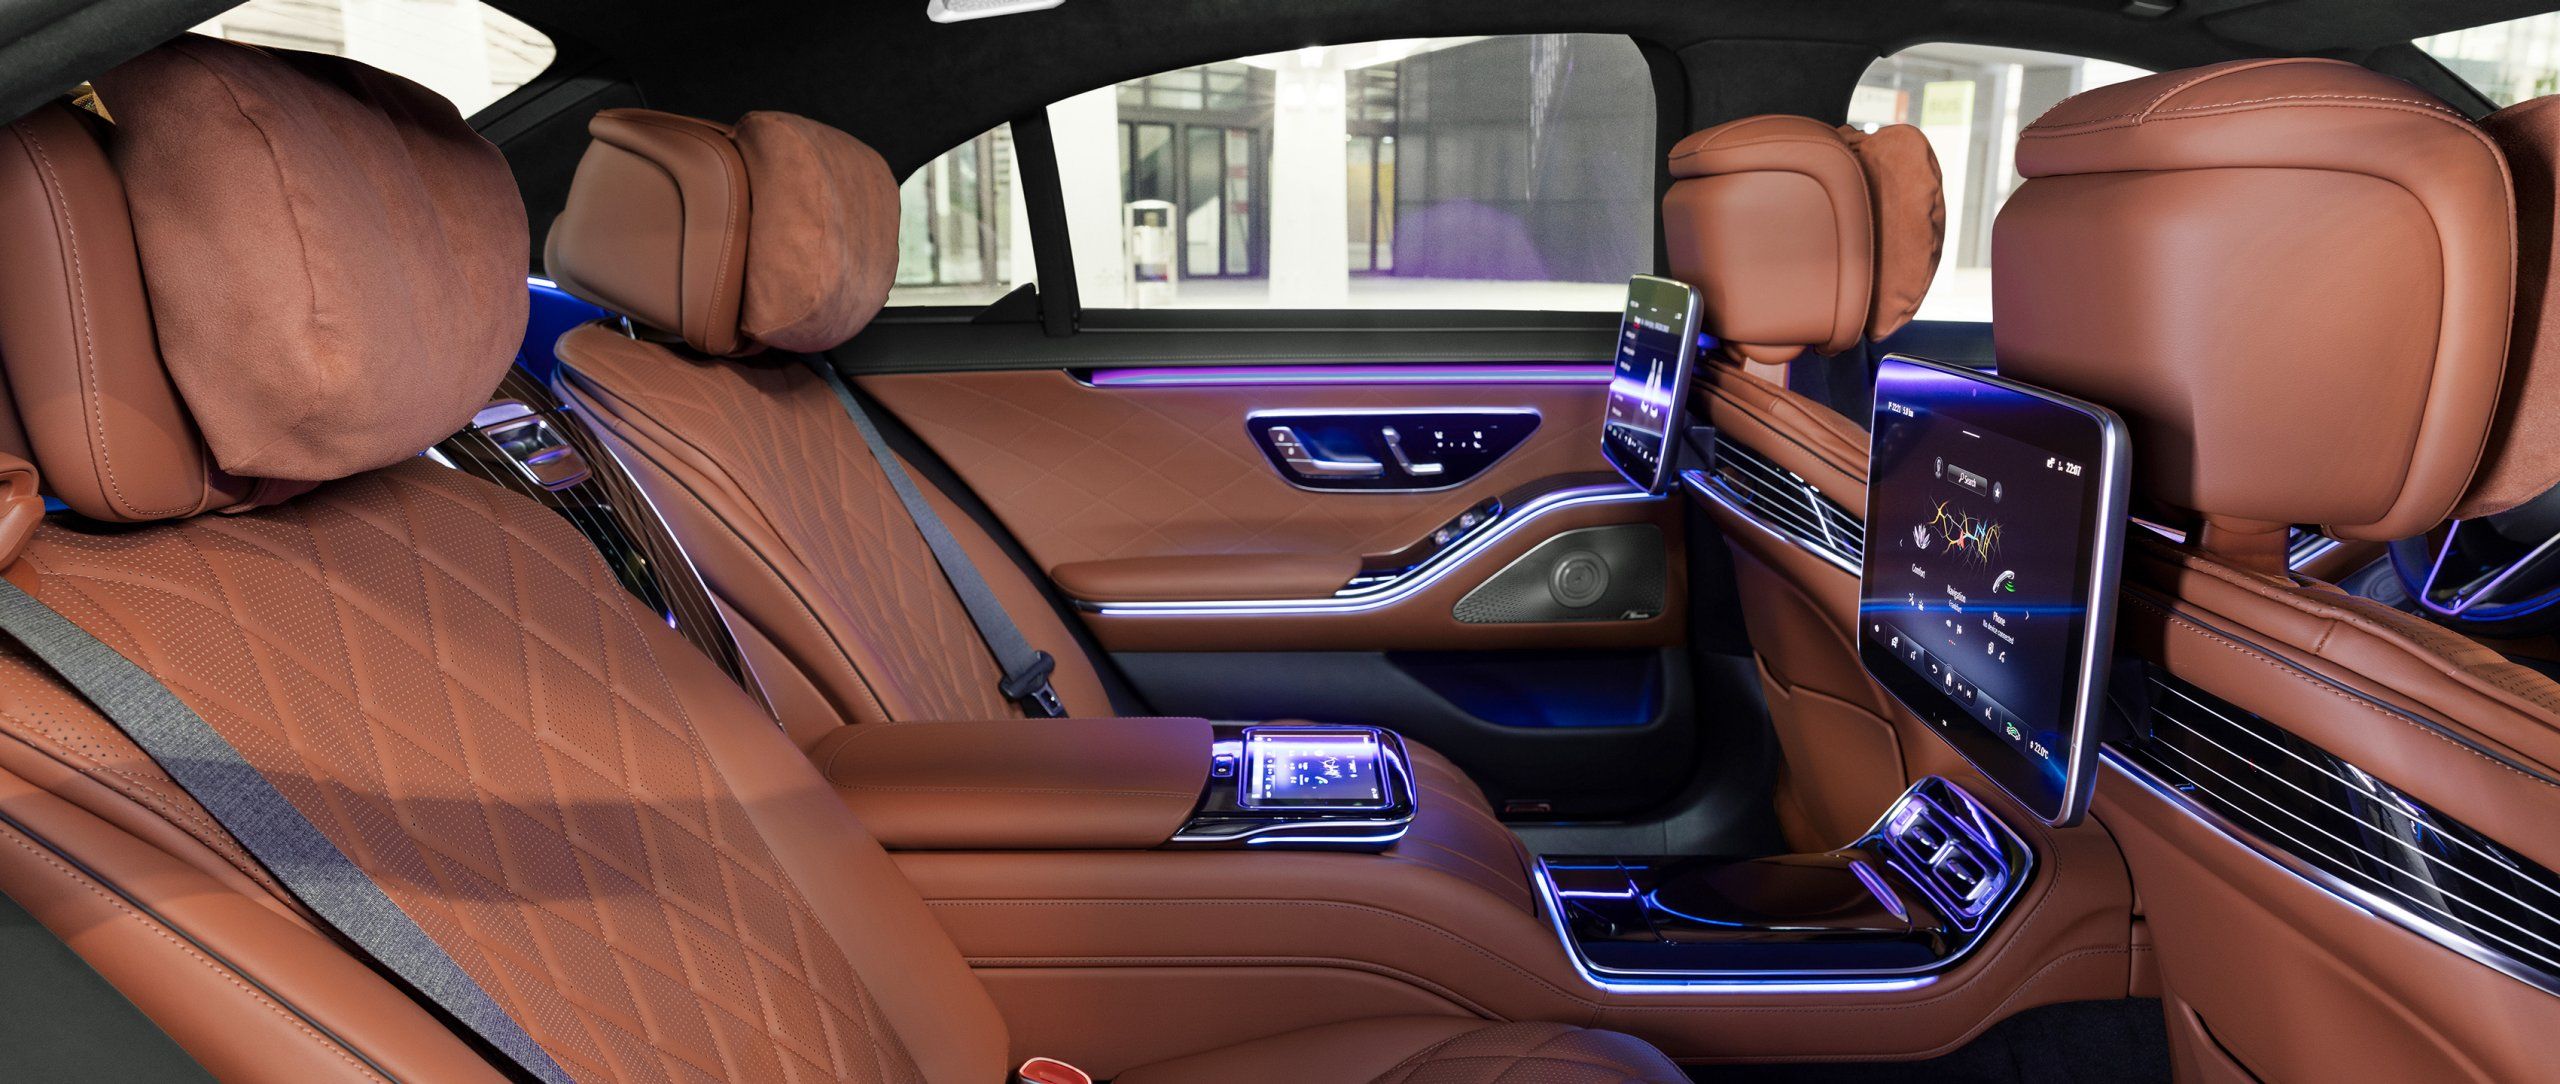 2022 Mercedes Benz S Class Interior